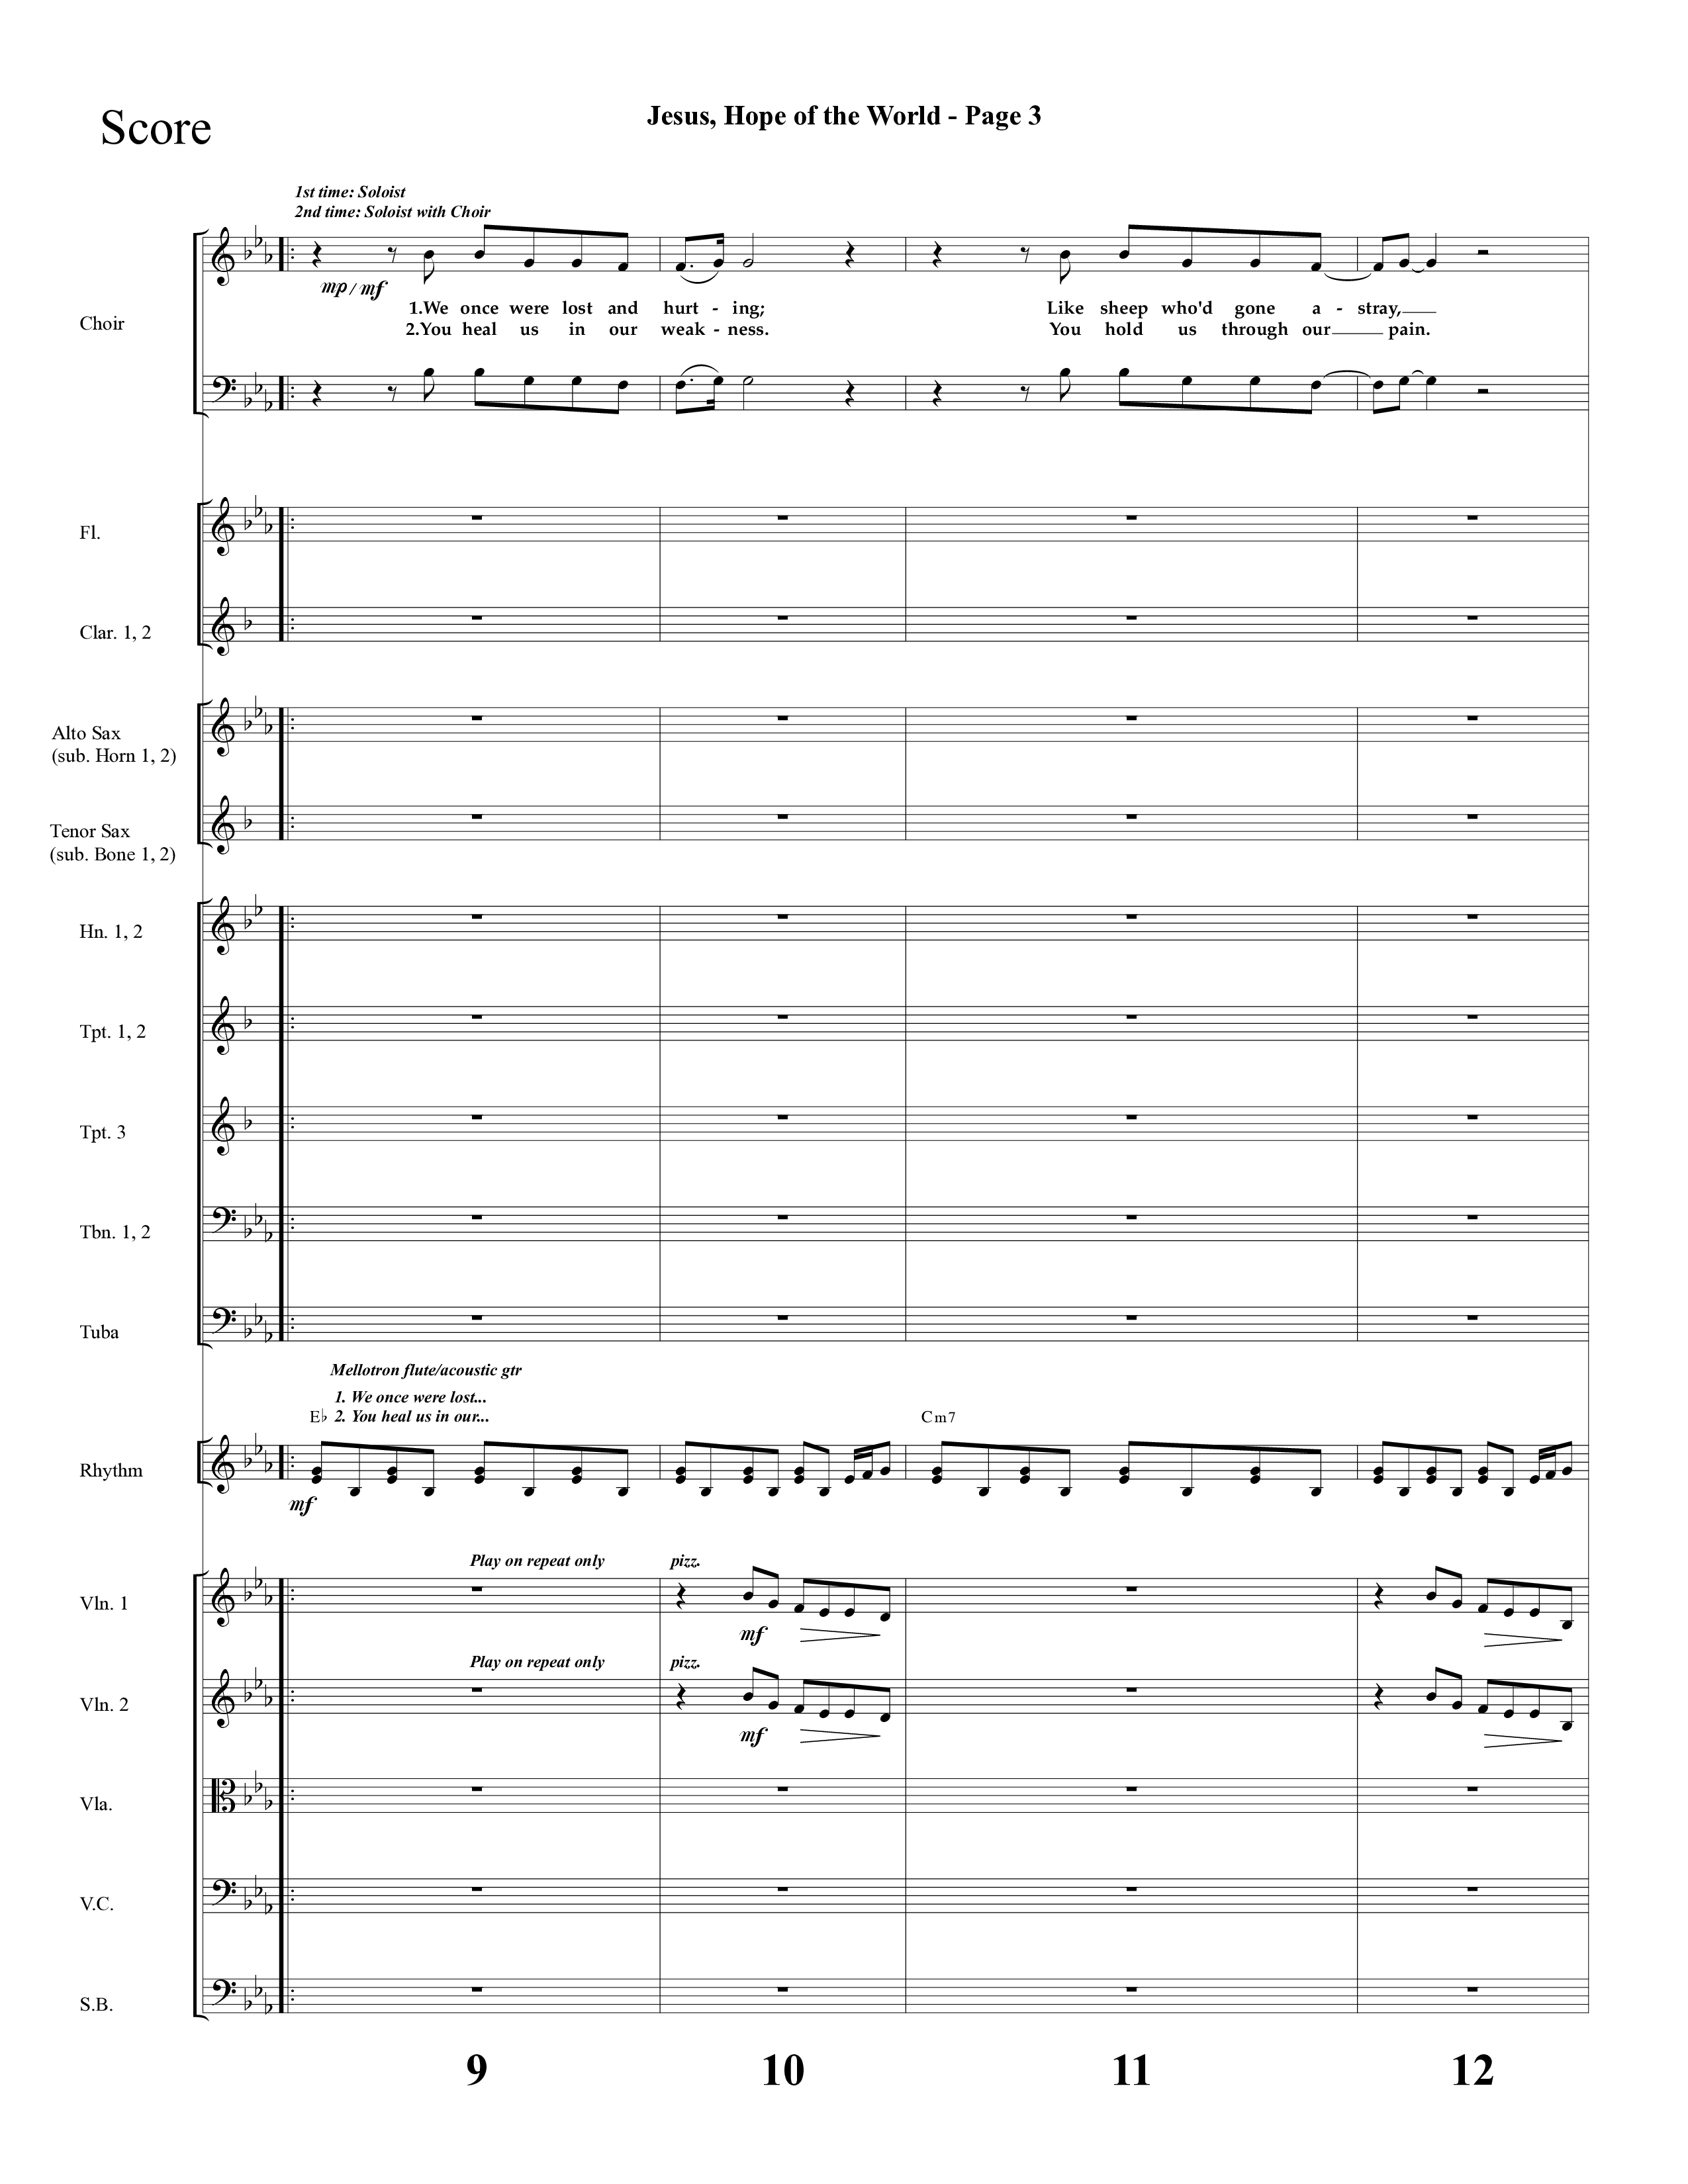 Jesus Hope Of The World (Choral Anthem SATB) Orchestration (Lifeway Choral / Arr. Mark Willard / Orch. Stephen K. Hand / Orch. Phillip Keveren)